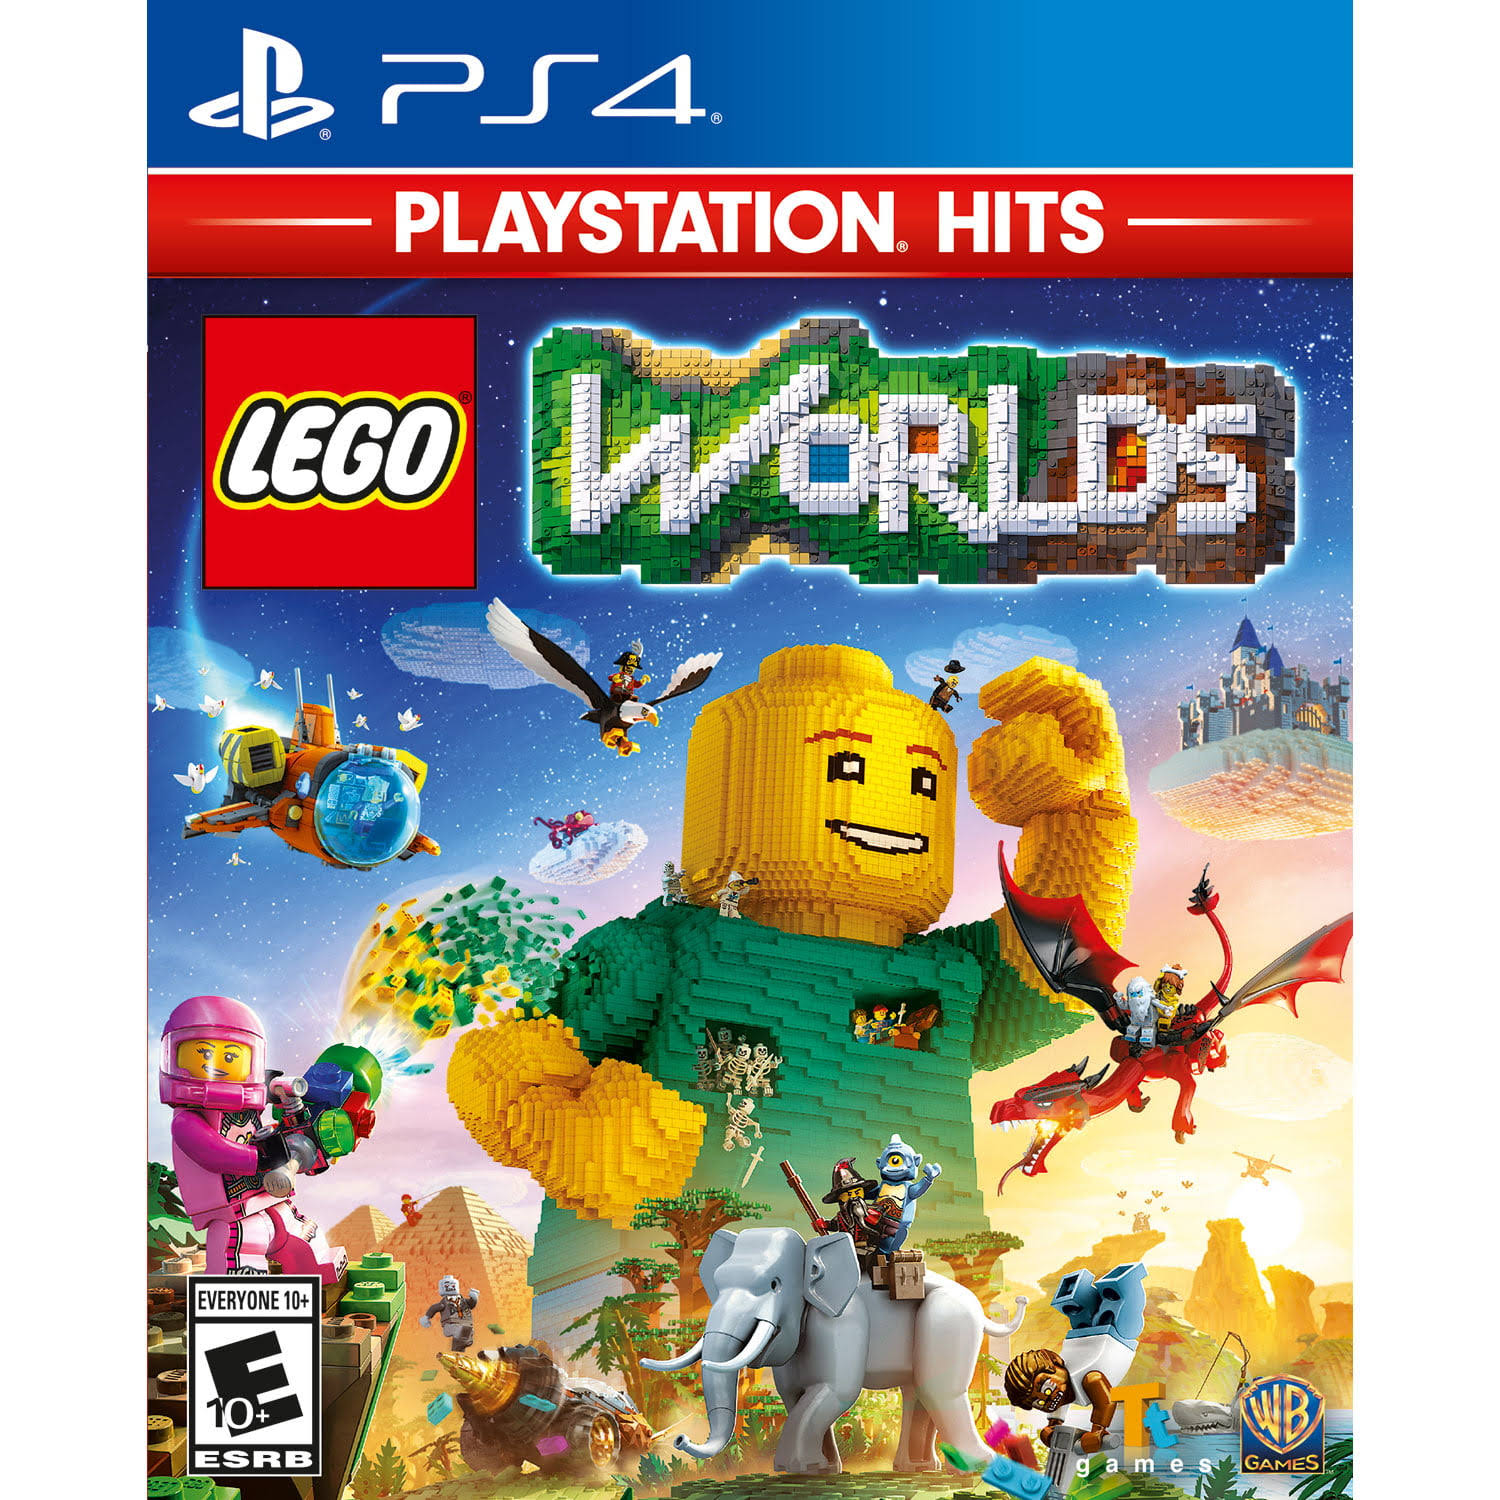 LEGO Worlds, Playstation 4 Hits